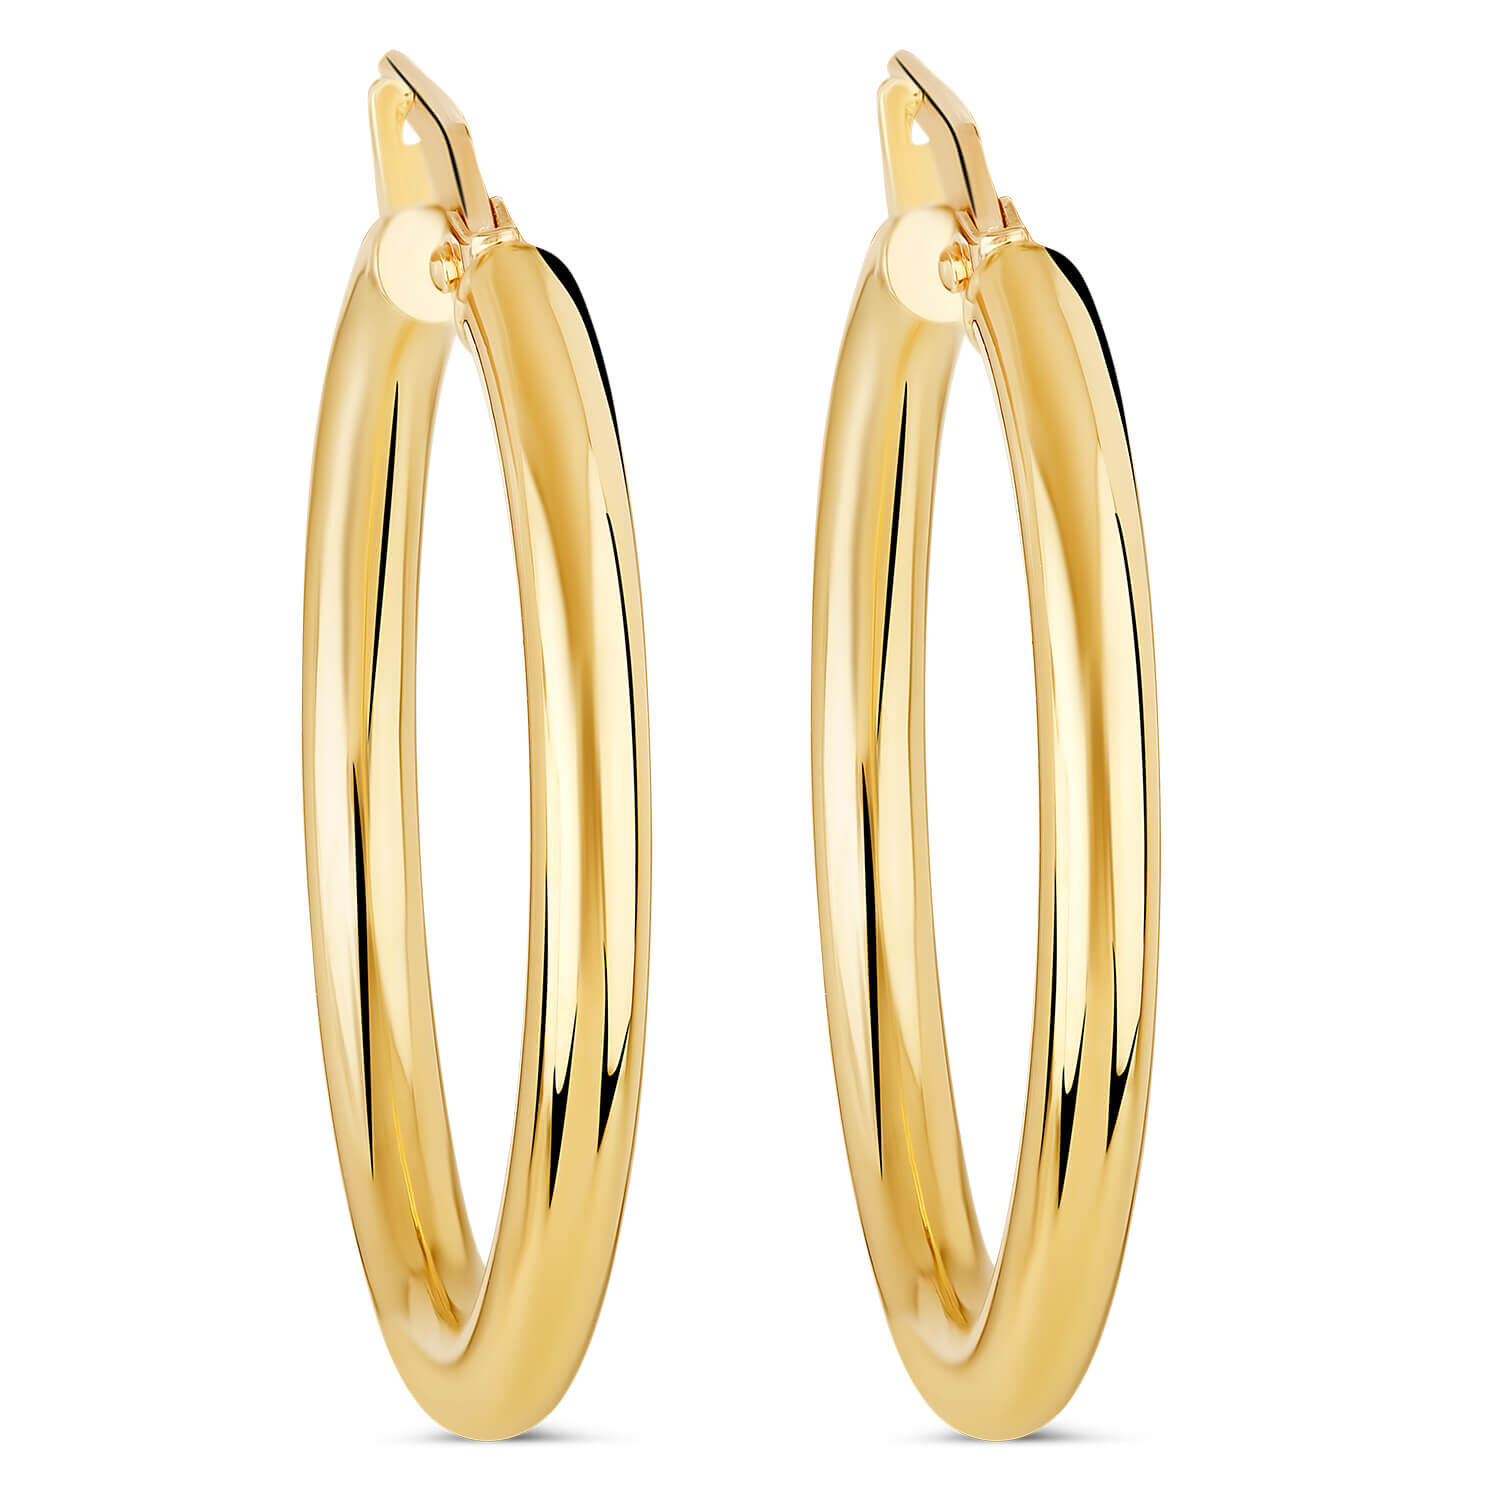 Buy Criollas online : Gold-plated sterling silver 925 plain hoop earrings  14mm - Com-forsa S.L.